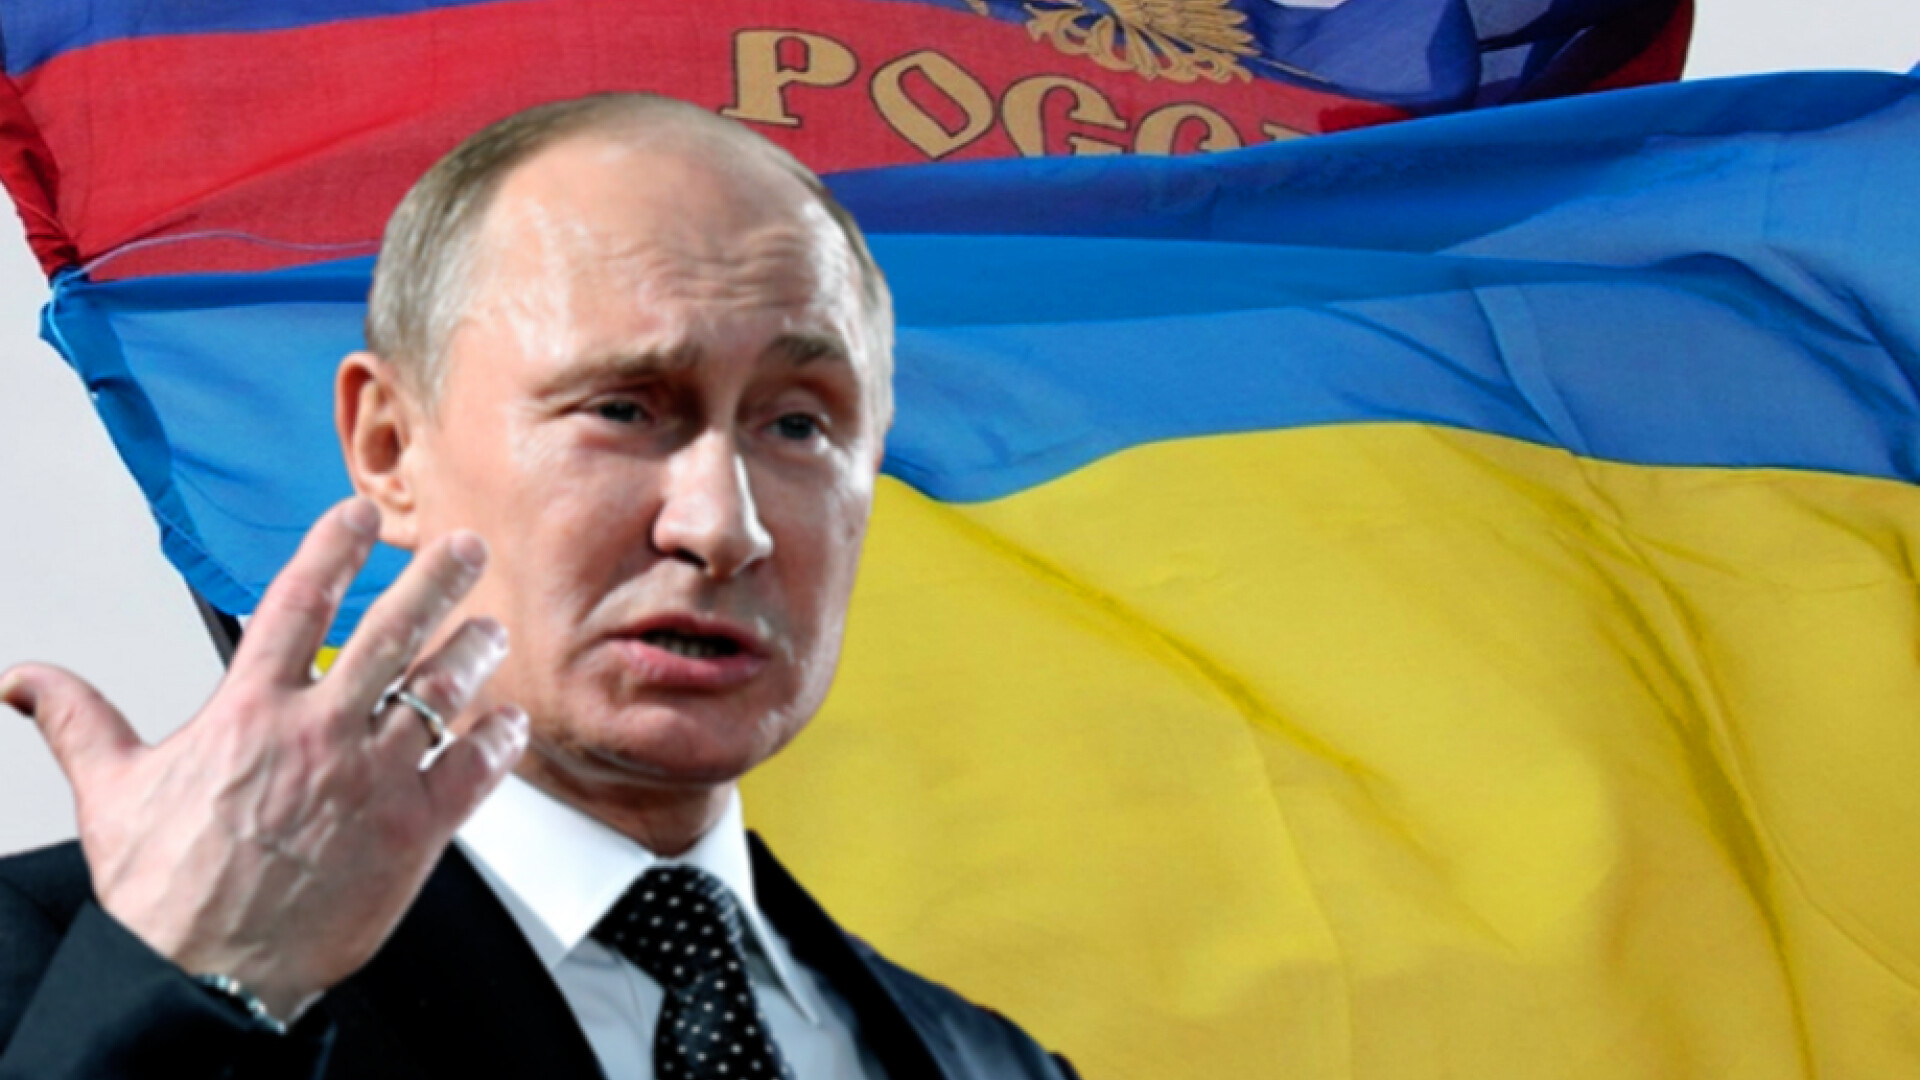 Putin cu steag UCraina si Rusia